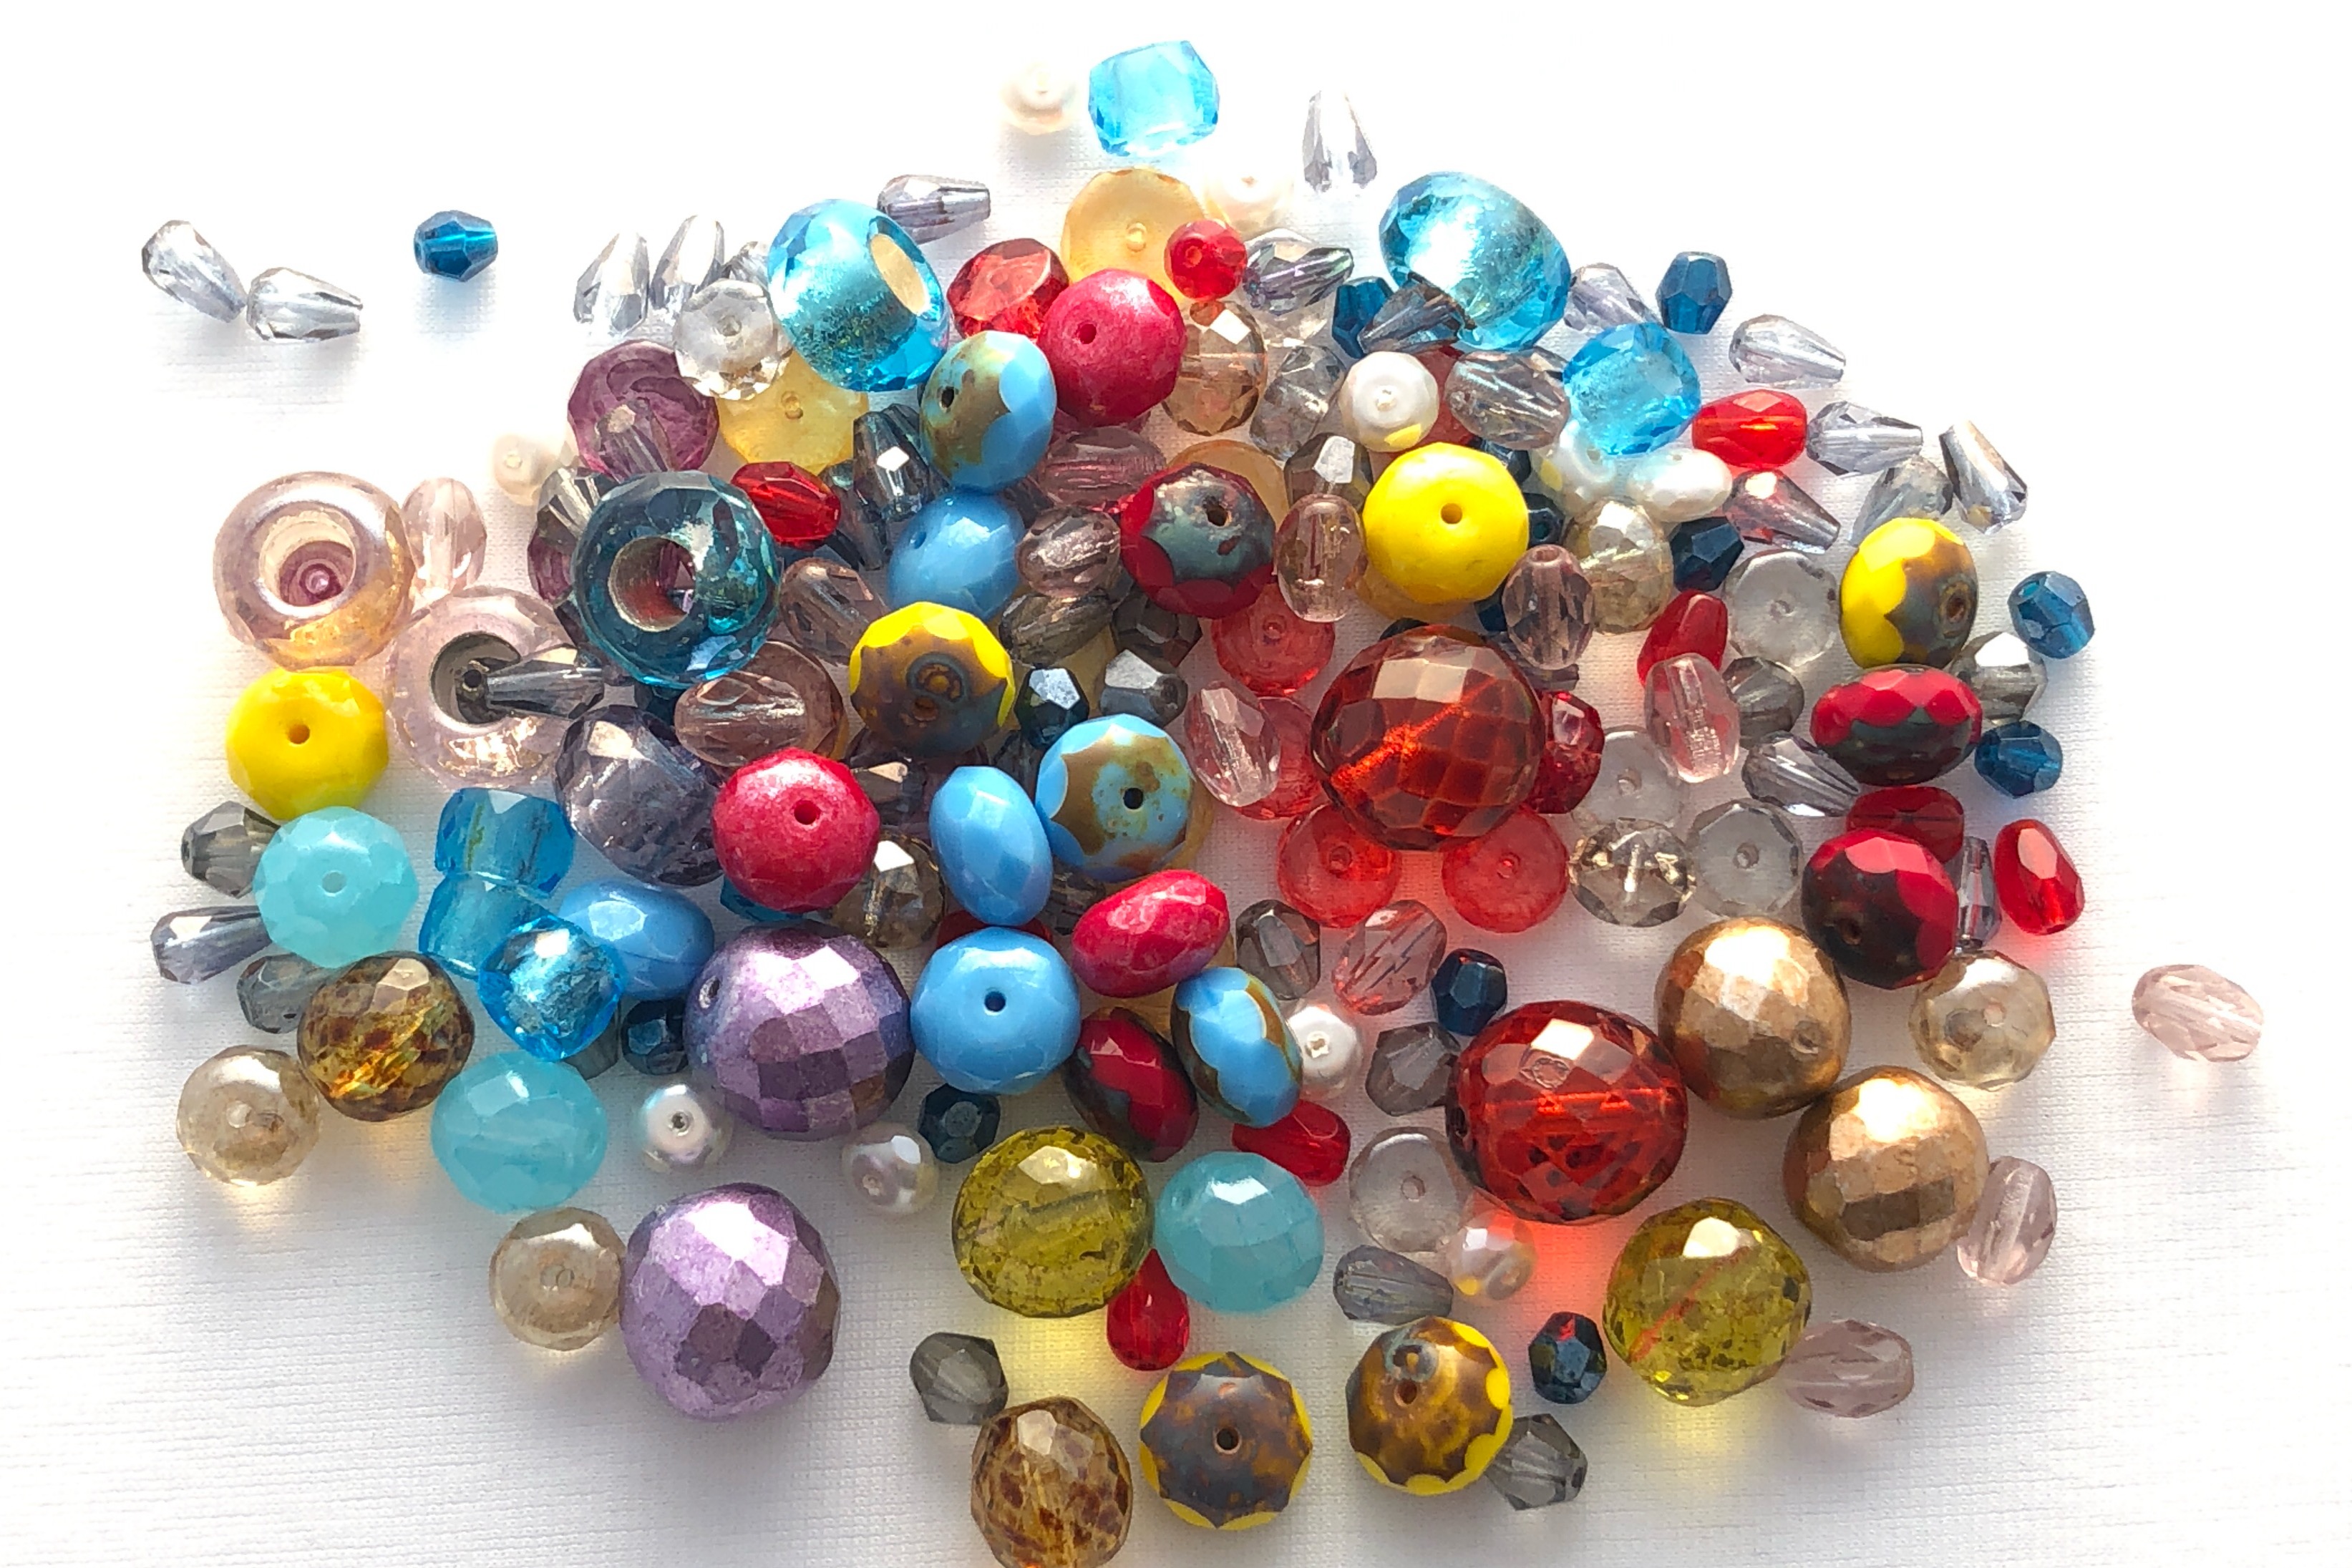 Perlin 250 G Perle di Vetro Perle di Vetro Perle di Cera Convolut Sfera Grigio Argento Mix Set 4 6 8 10 12 mm Set Fai da Te Set di Perle Mix Perle Perle per Filo Vetro D36 